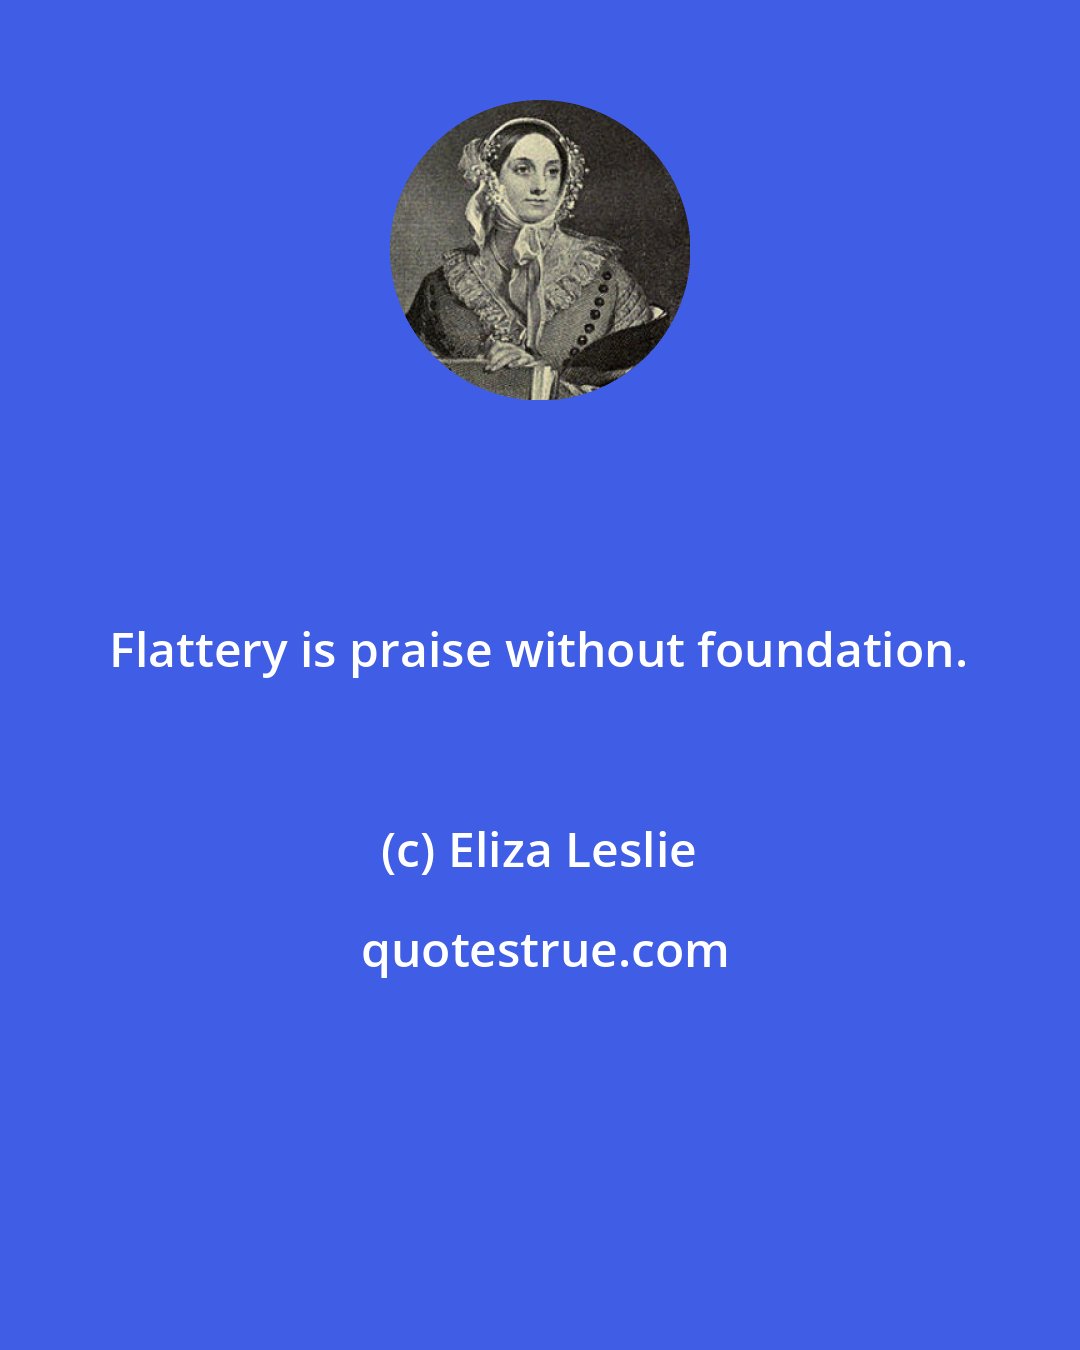 Eliza Leslie: Flattery is praise without foundation.